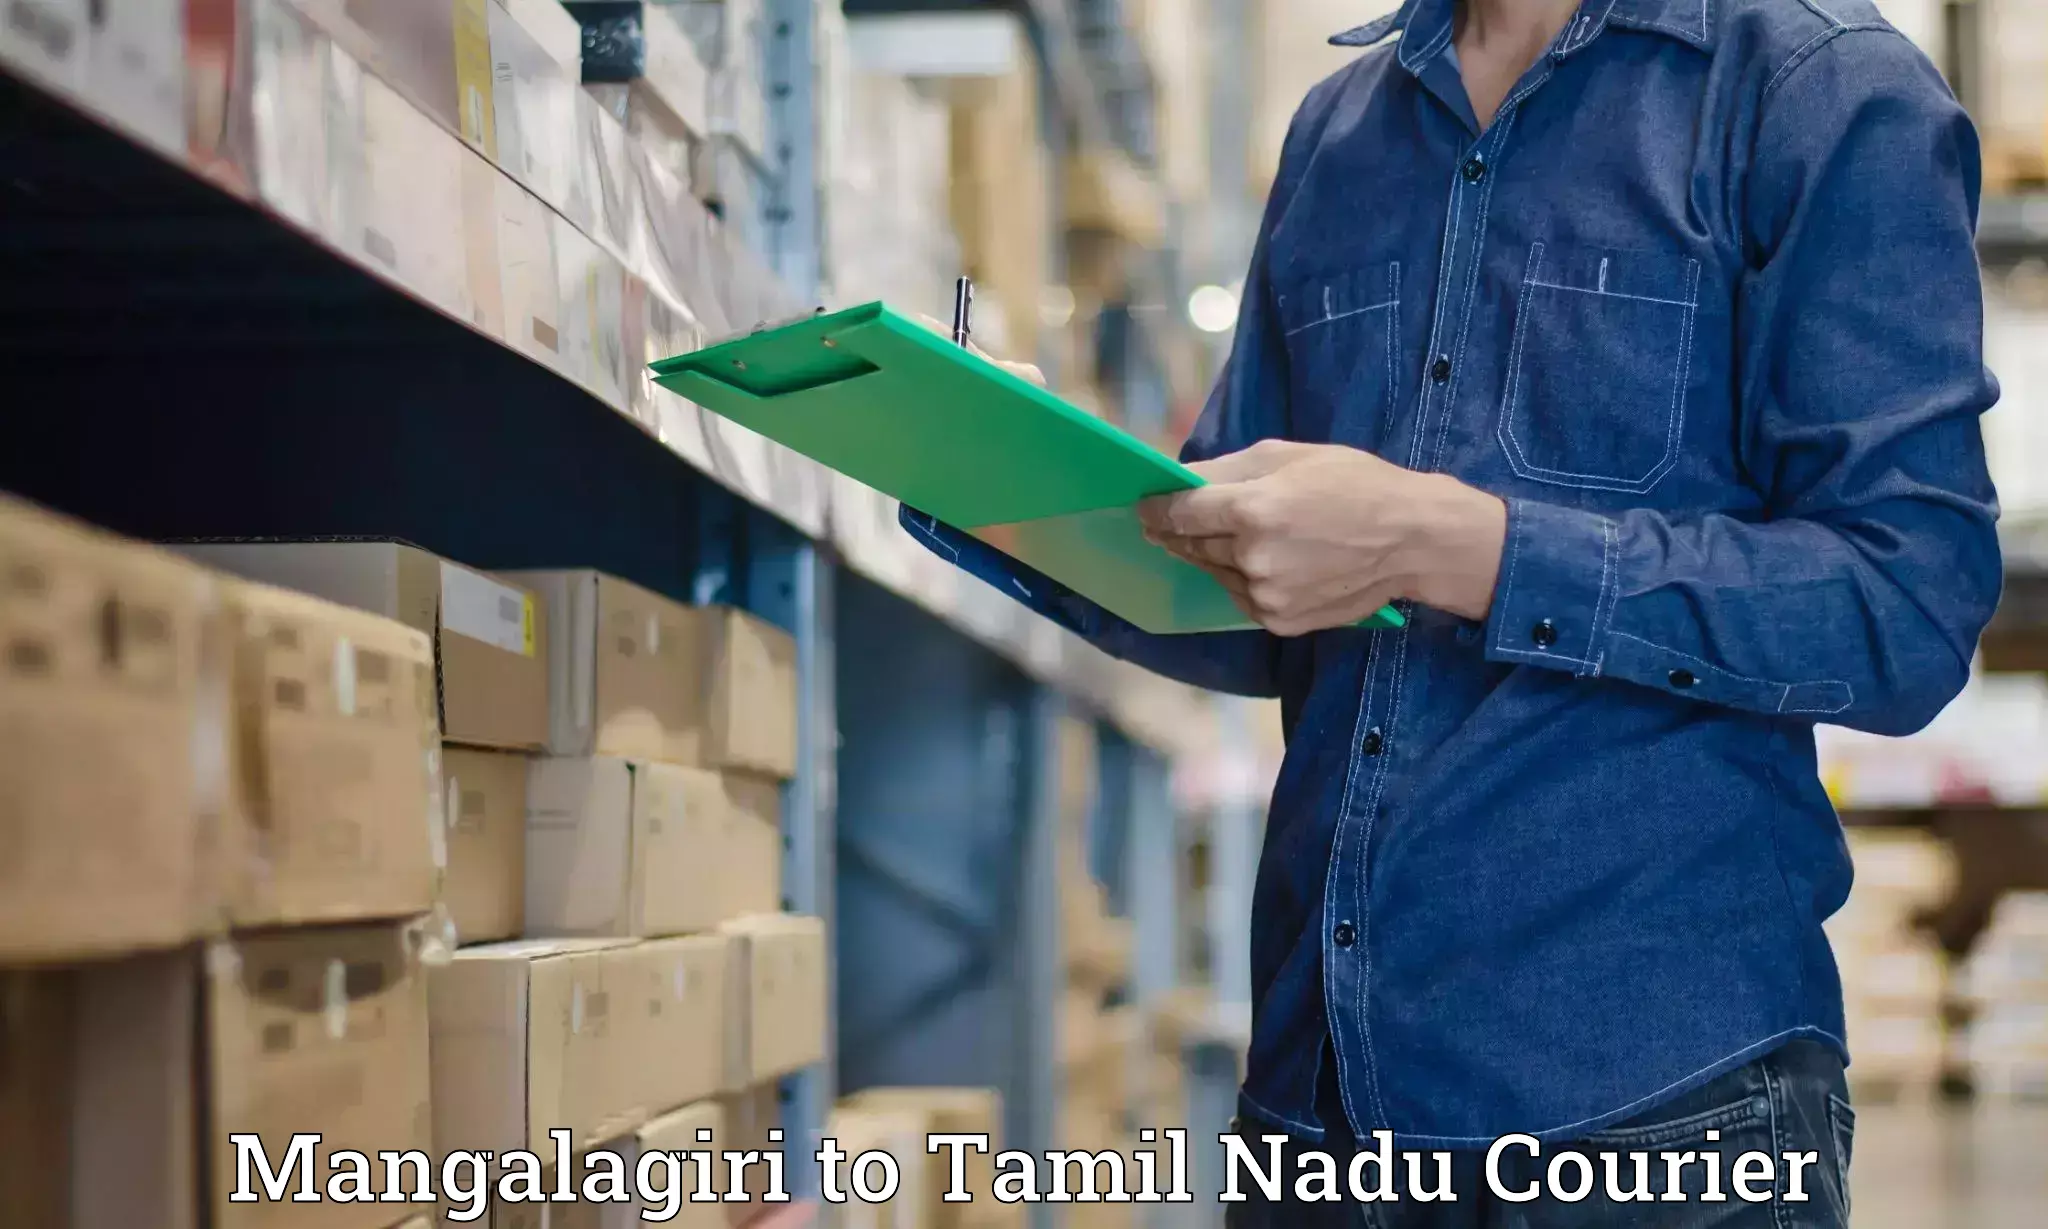 On-demand courier Mangalagiri to Chennai Port